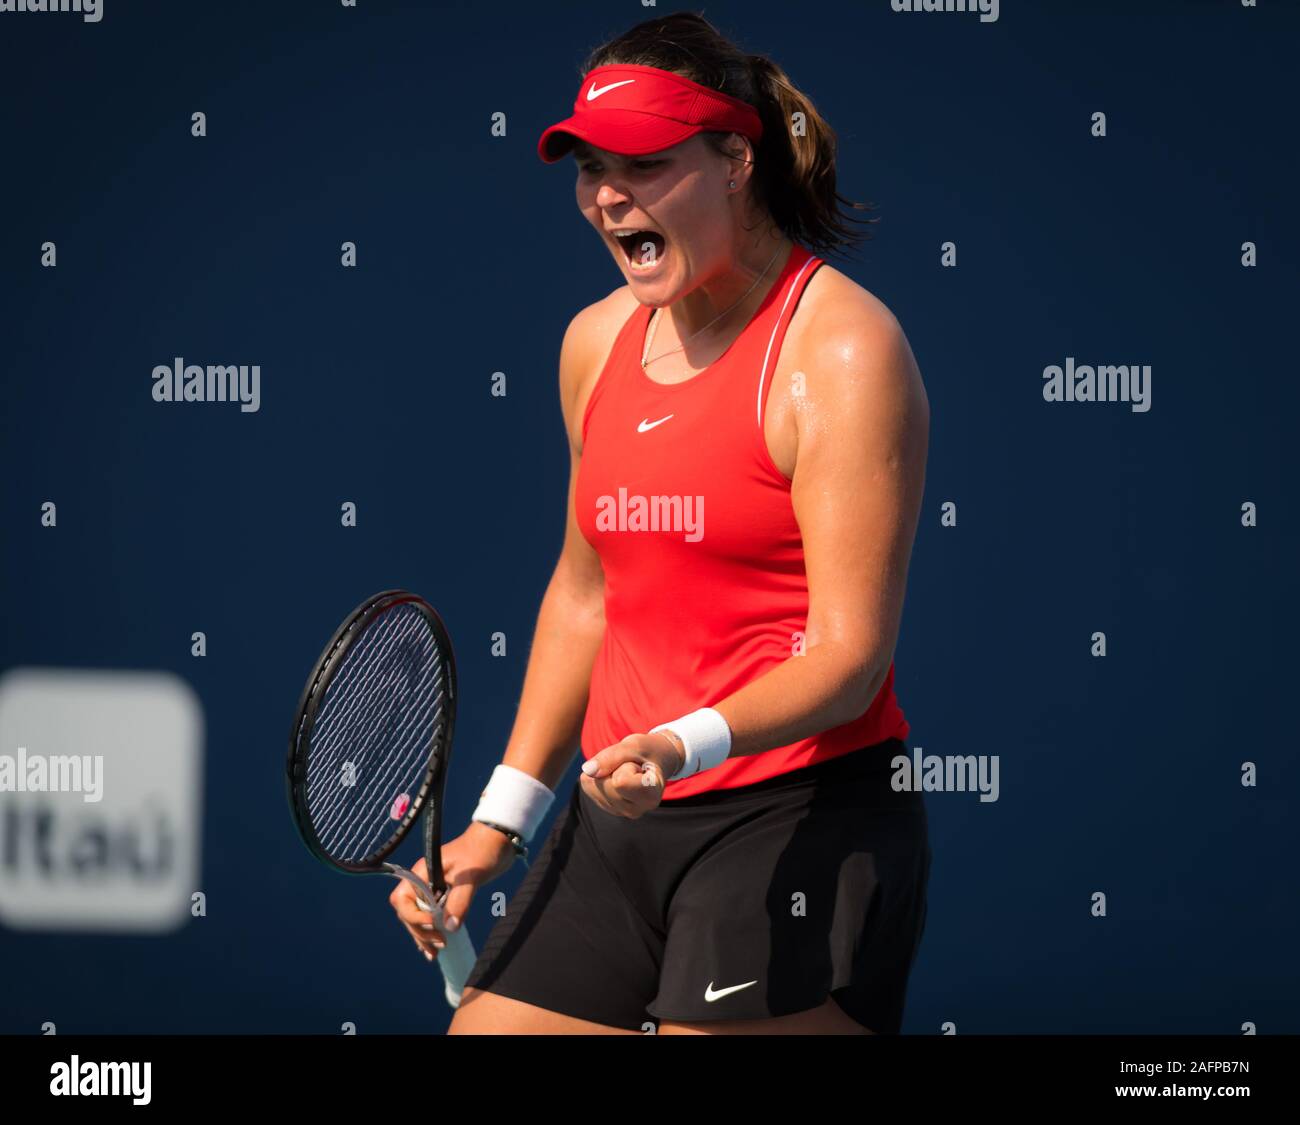 Lidziya Marozava of Belarus playing doubles at the 2019 Miami Open WTA  Premier Mandatory tennis tournament Stock Photo - Alamy